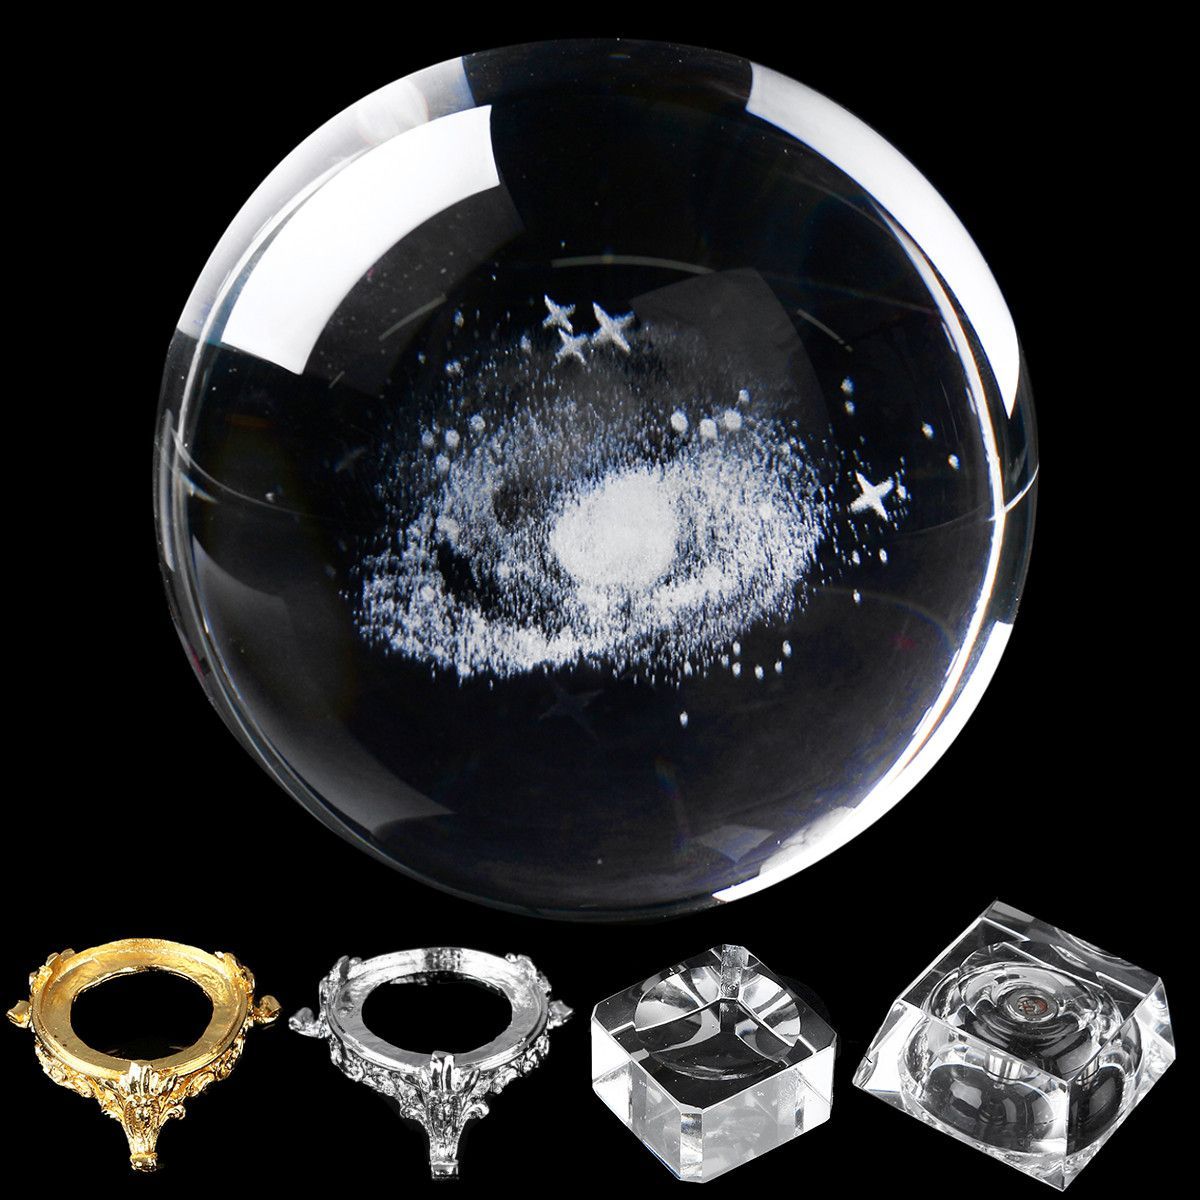 8cm-Diameter-Globe-Galaxy-Miniatures-Crystals-Ball-3D-Laser-Engraved-Quartz-Ball-1535717